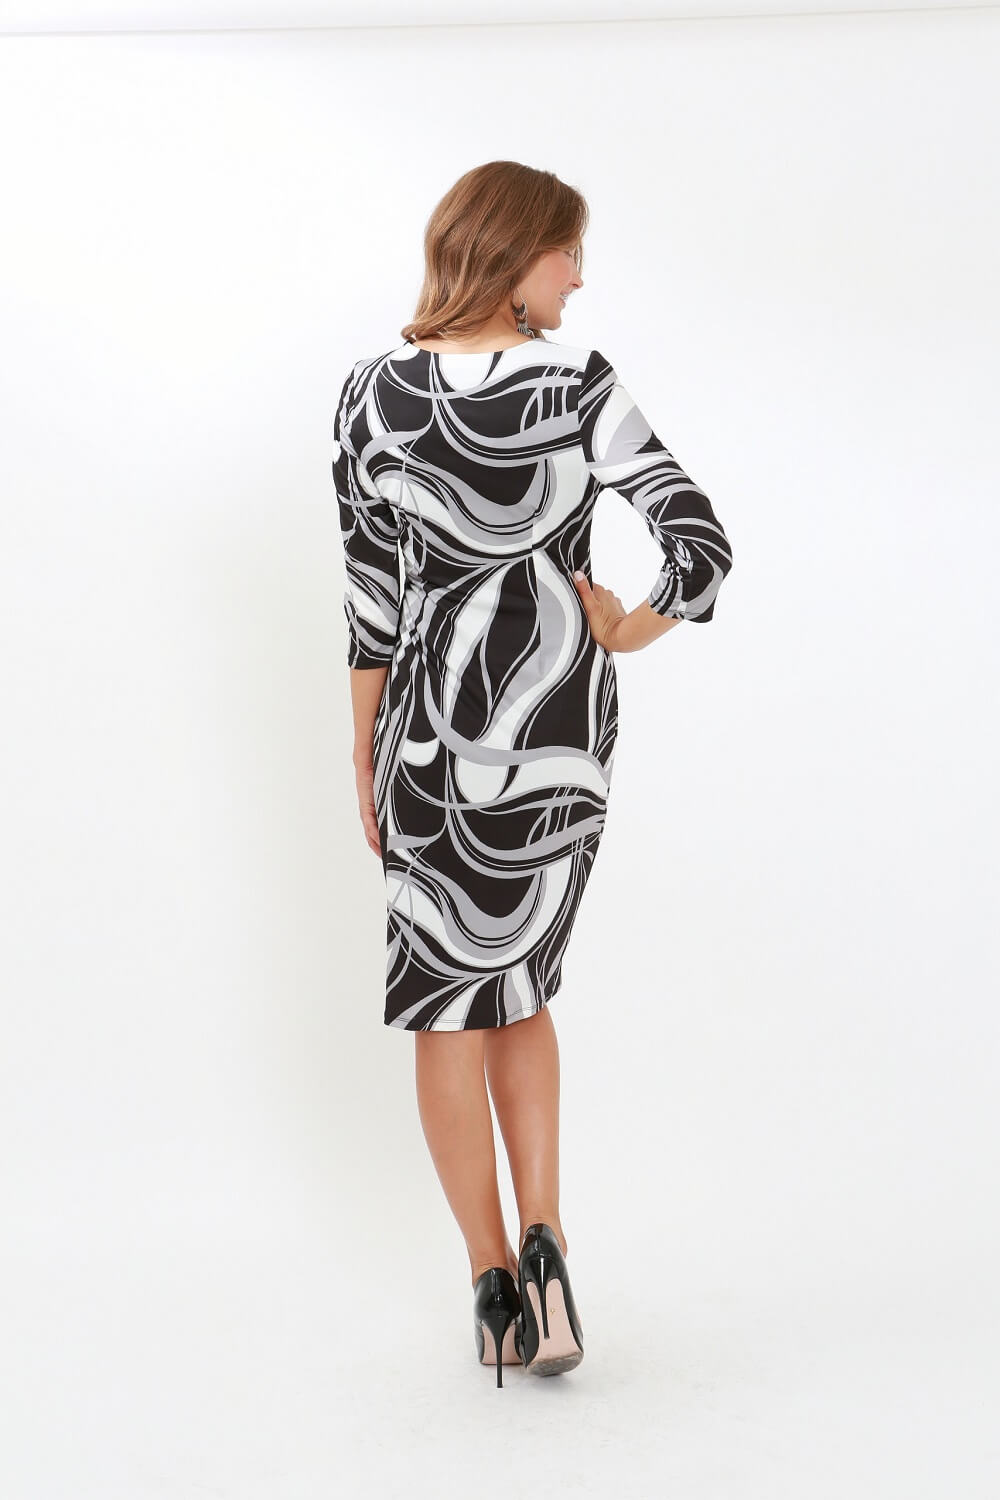 Grey Julianna Swirl Print 3/4 Sleeve Ruched Dress, Image 3 of 3